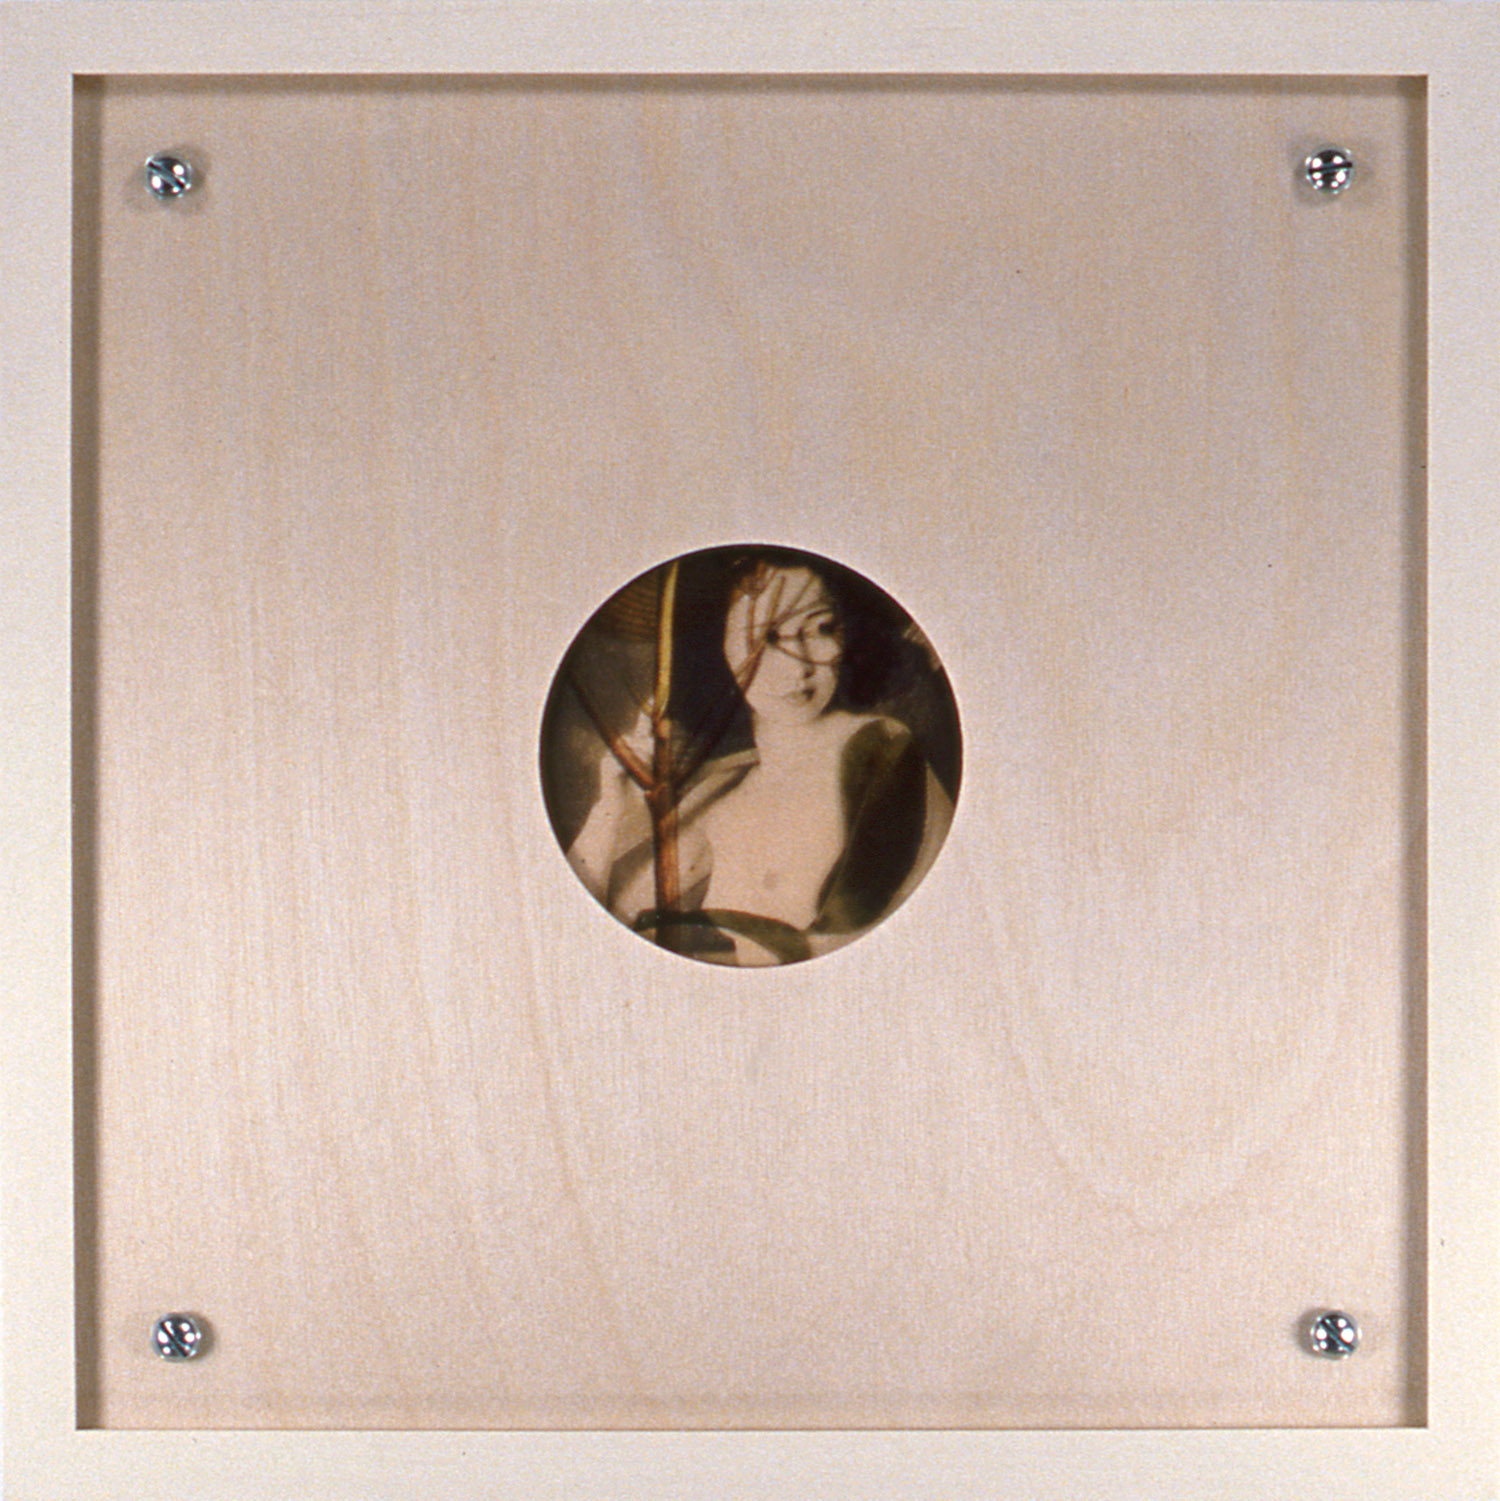   Peephole 1 , 1996, 10 1/2 x 10 1/2", mixed media with frame. 